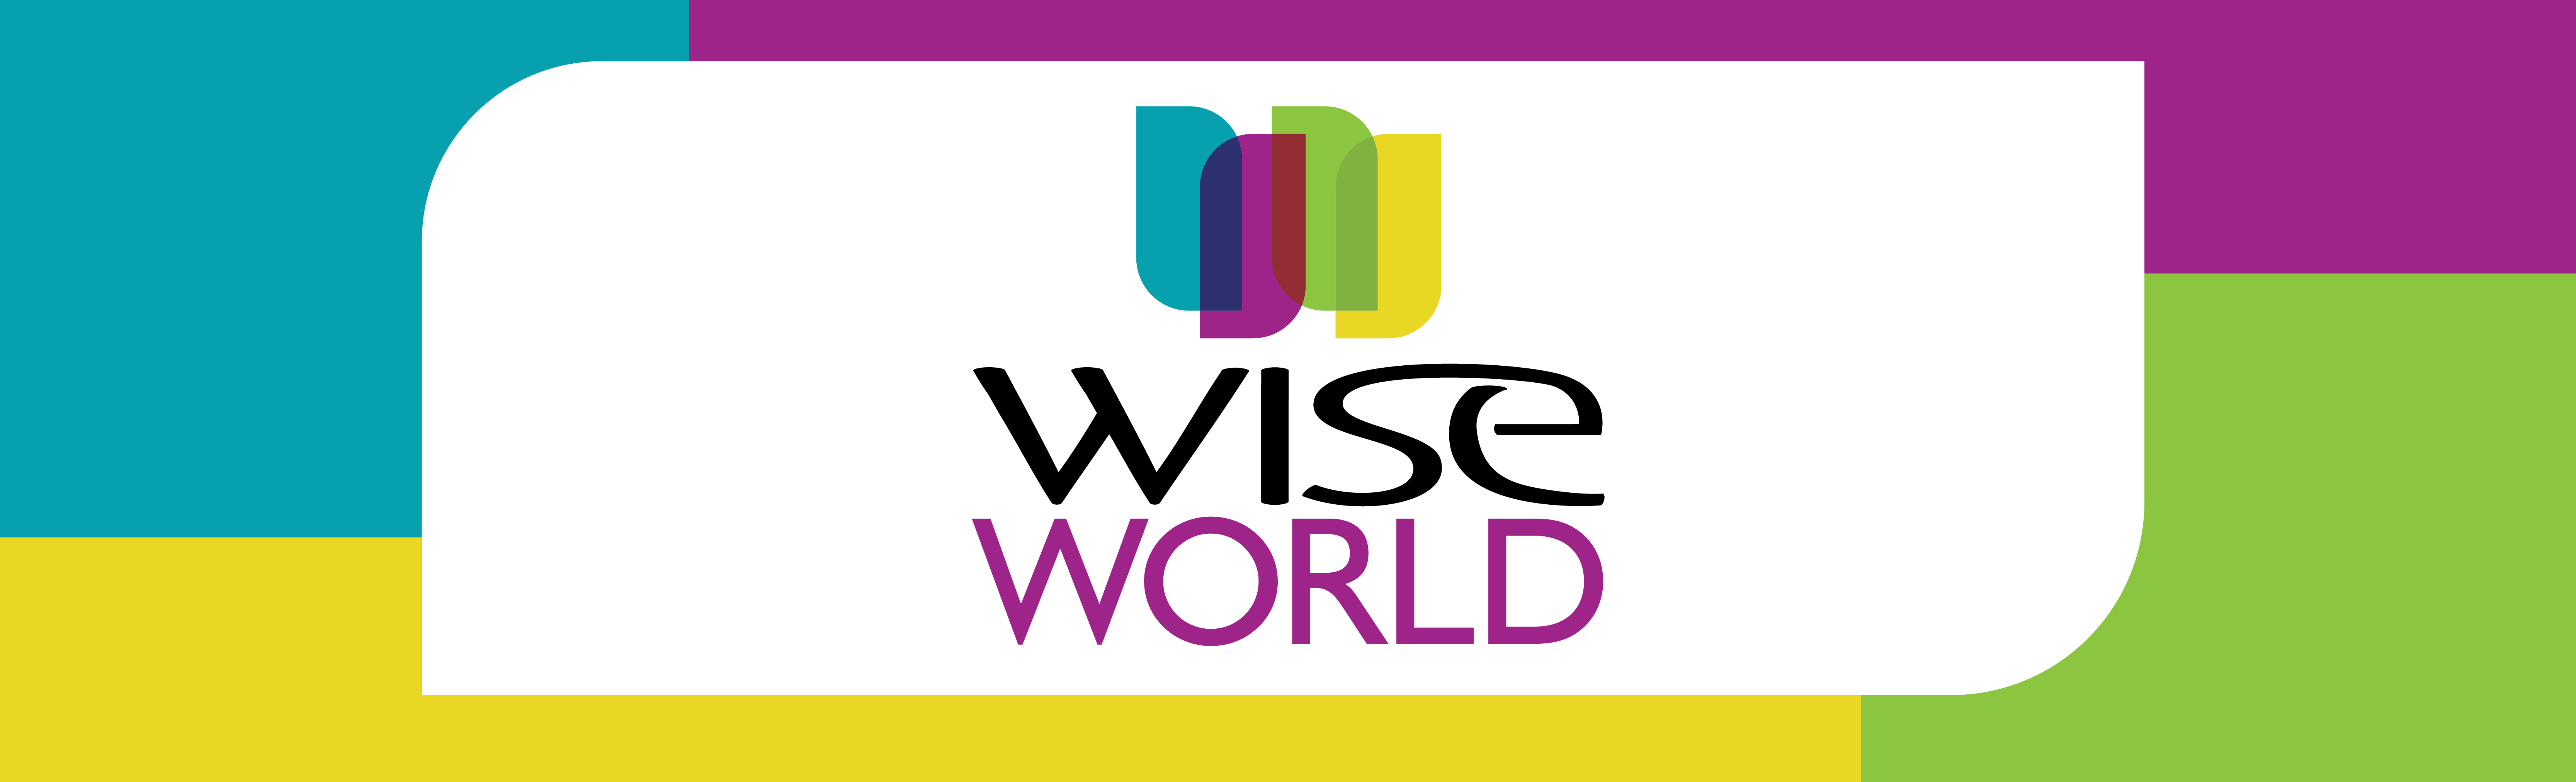 2021 WISE Web Headers WORLD